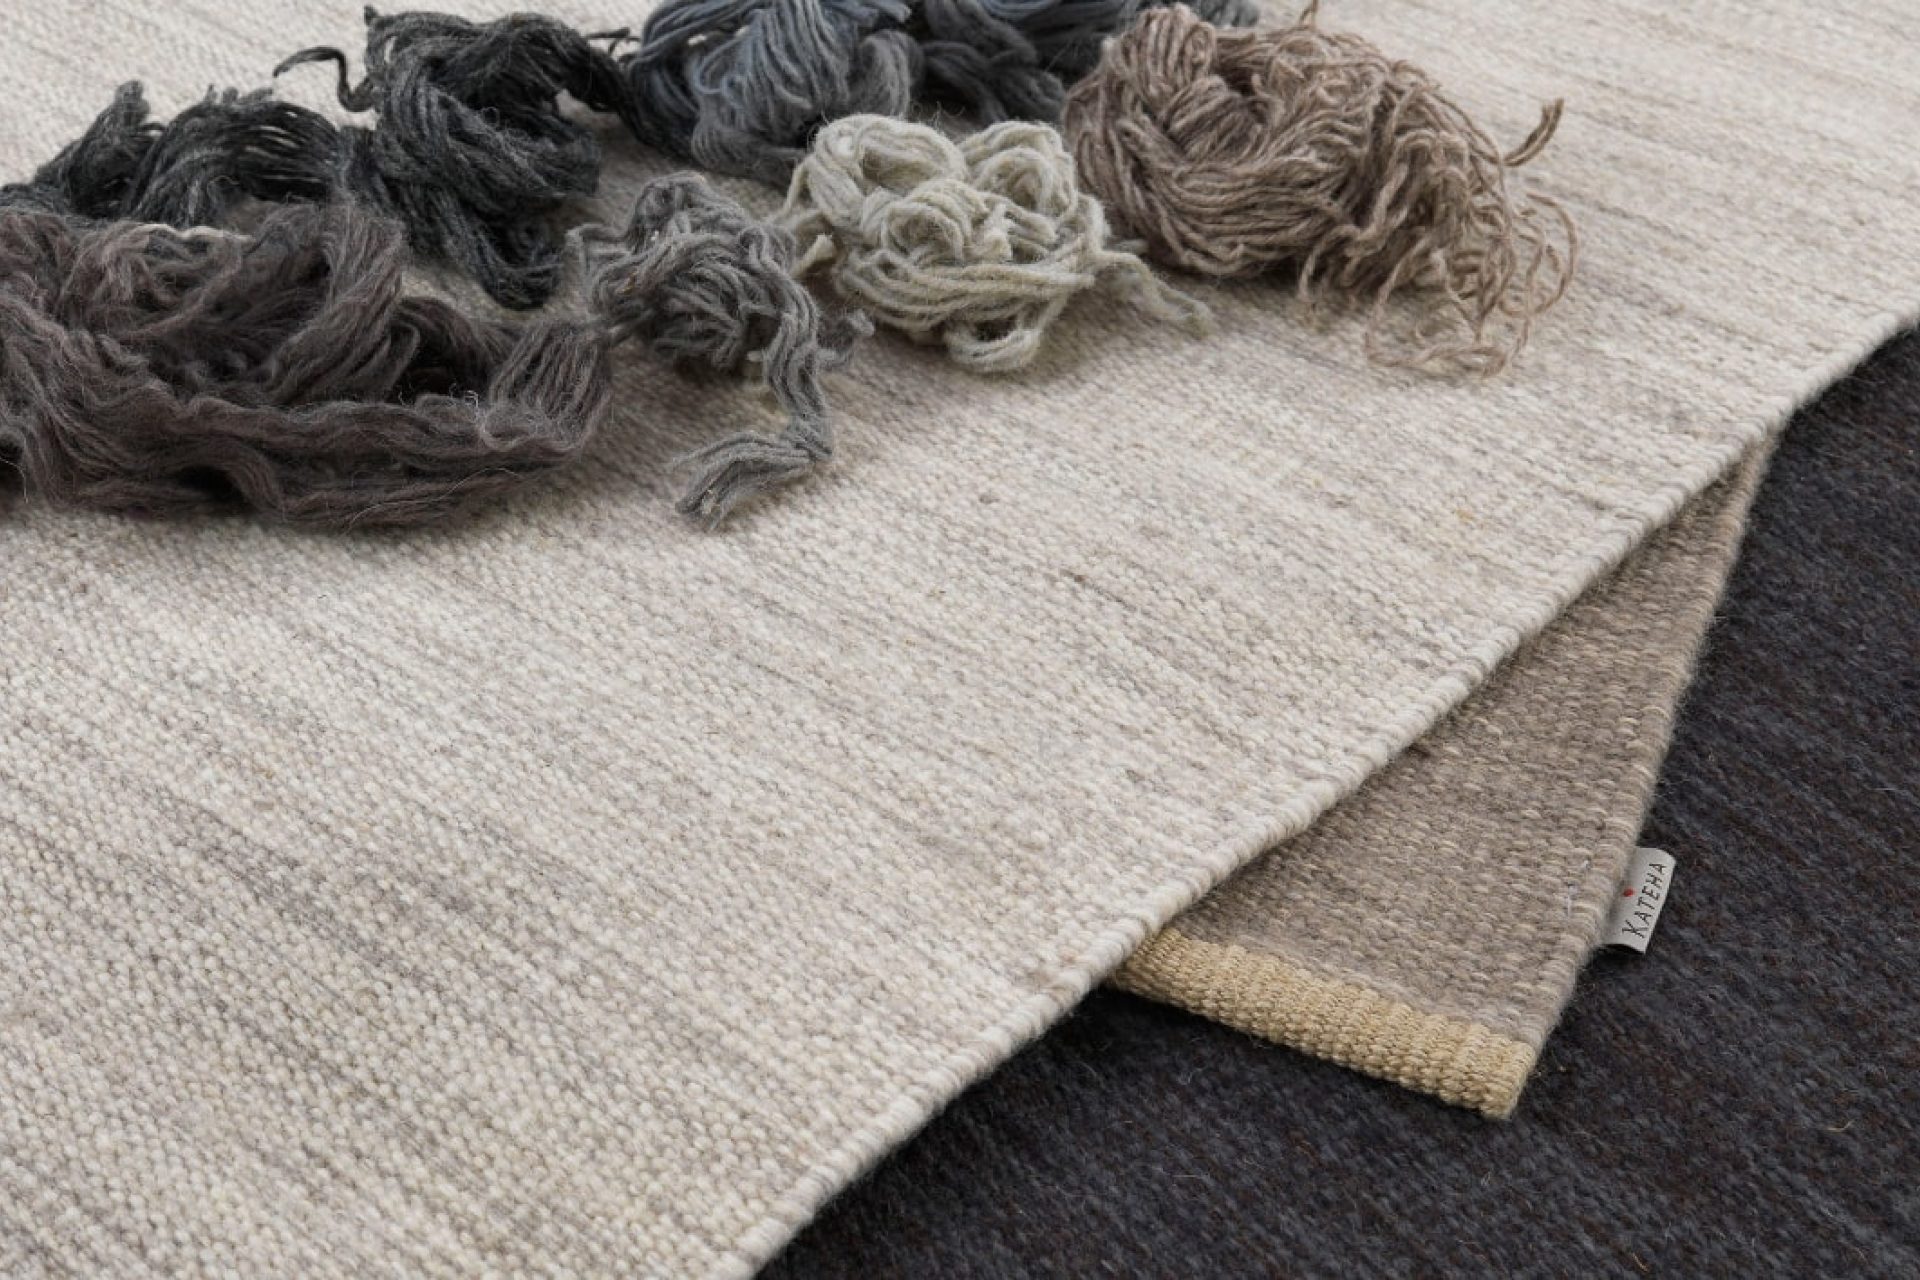 Display showing three parts of the woollen designer rugs, with grey and beige woollen yarn pieces